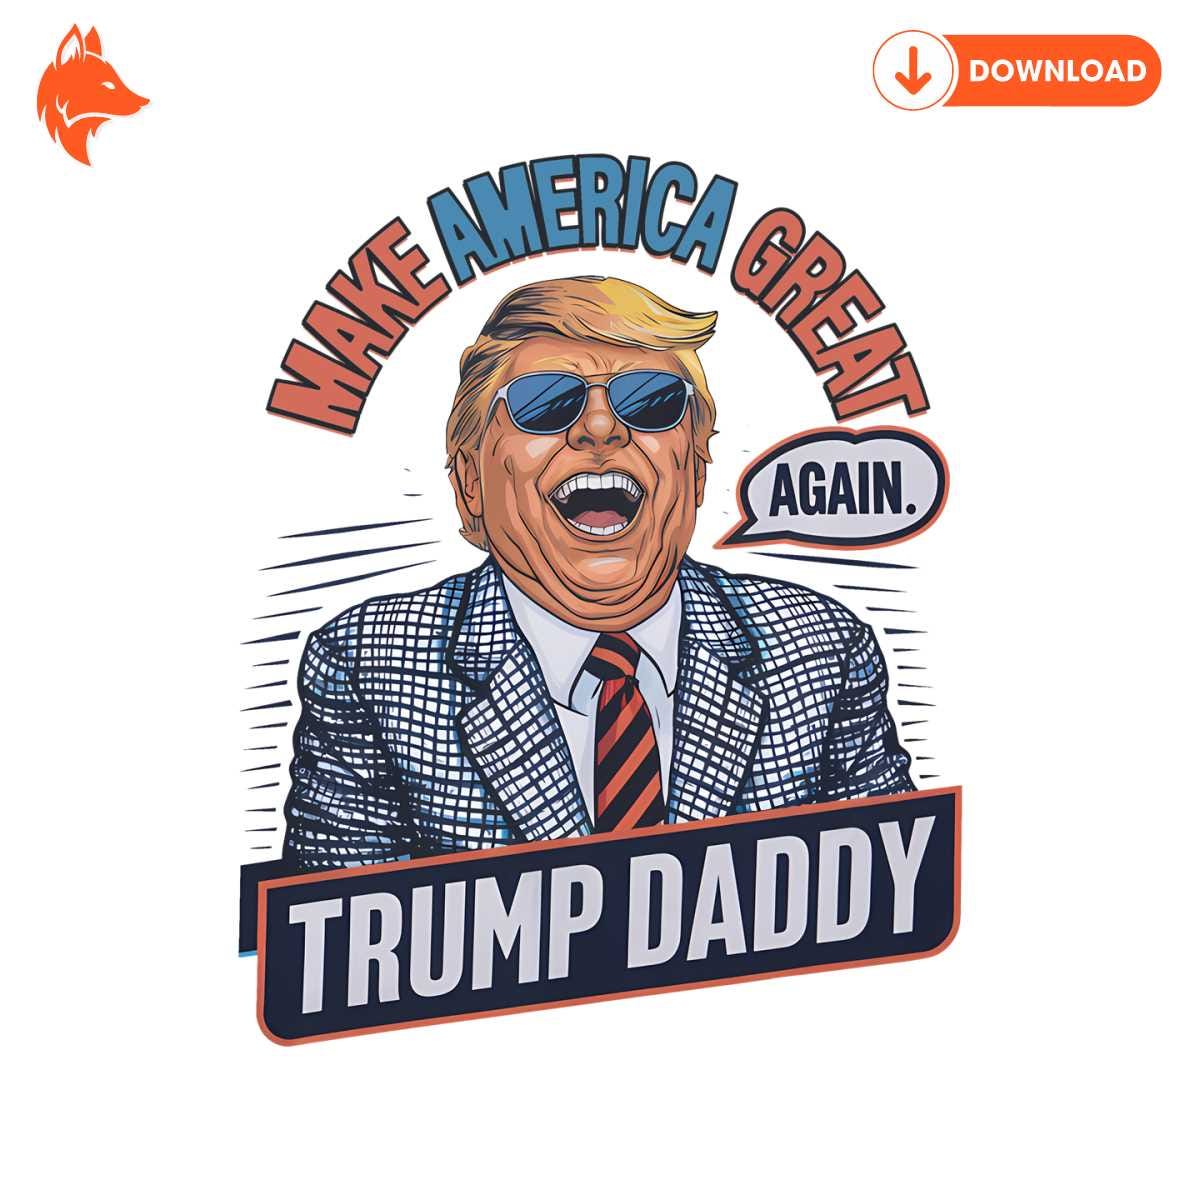 Make America Great Again Funny Trump Daddy PNG